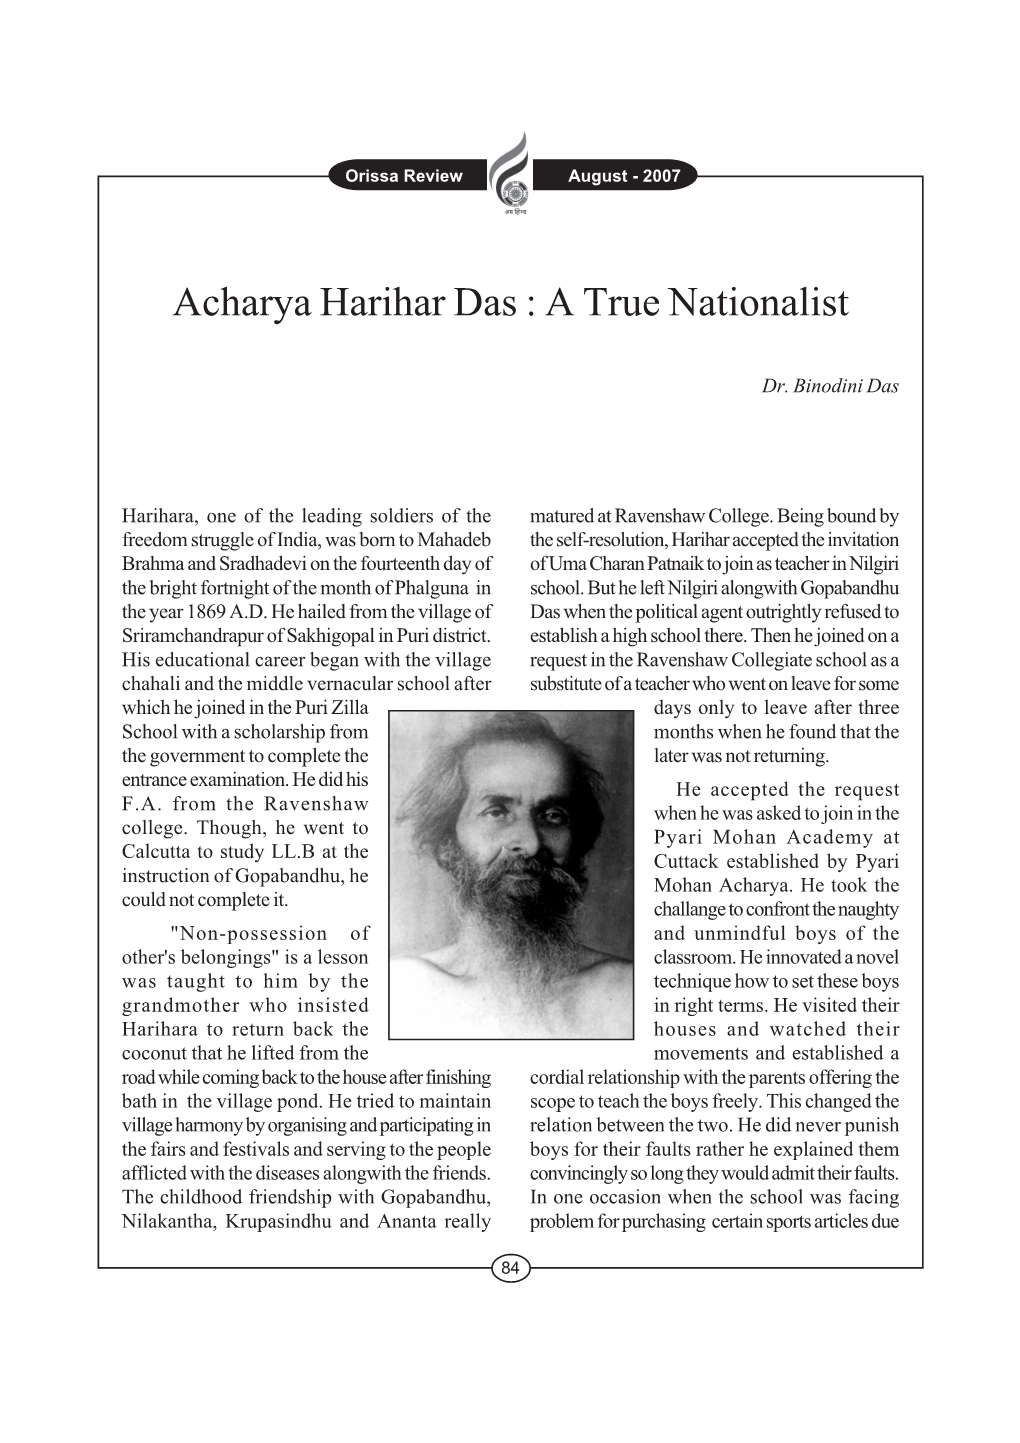 Acharya Harihar Das : a True Nationalist